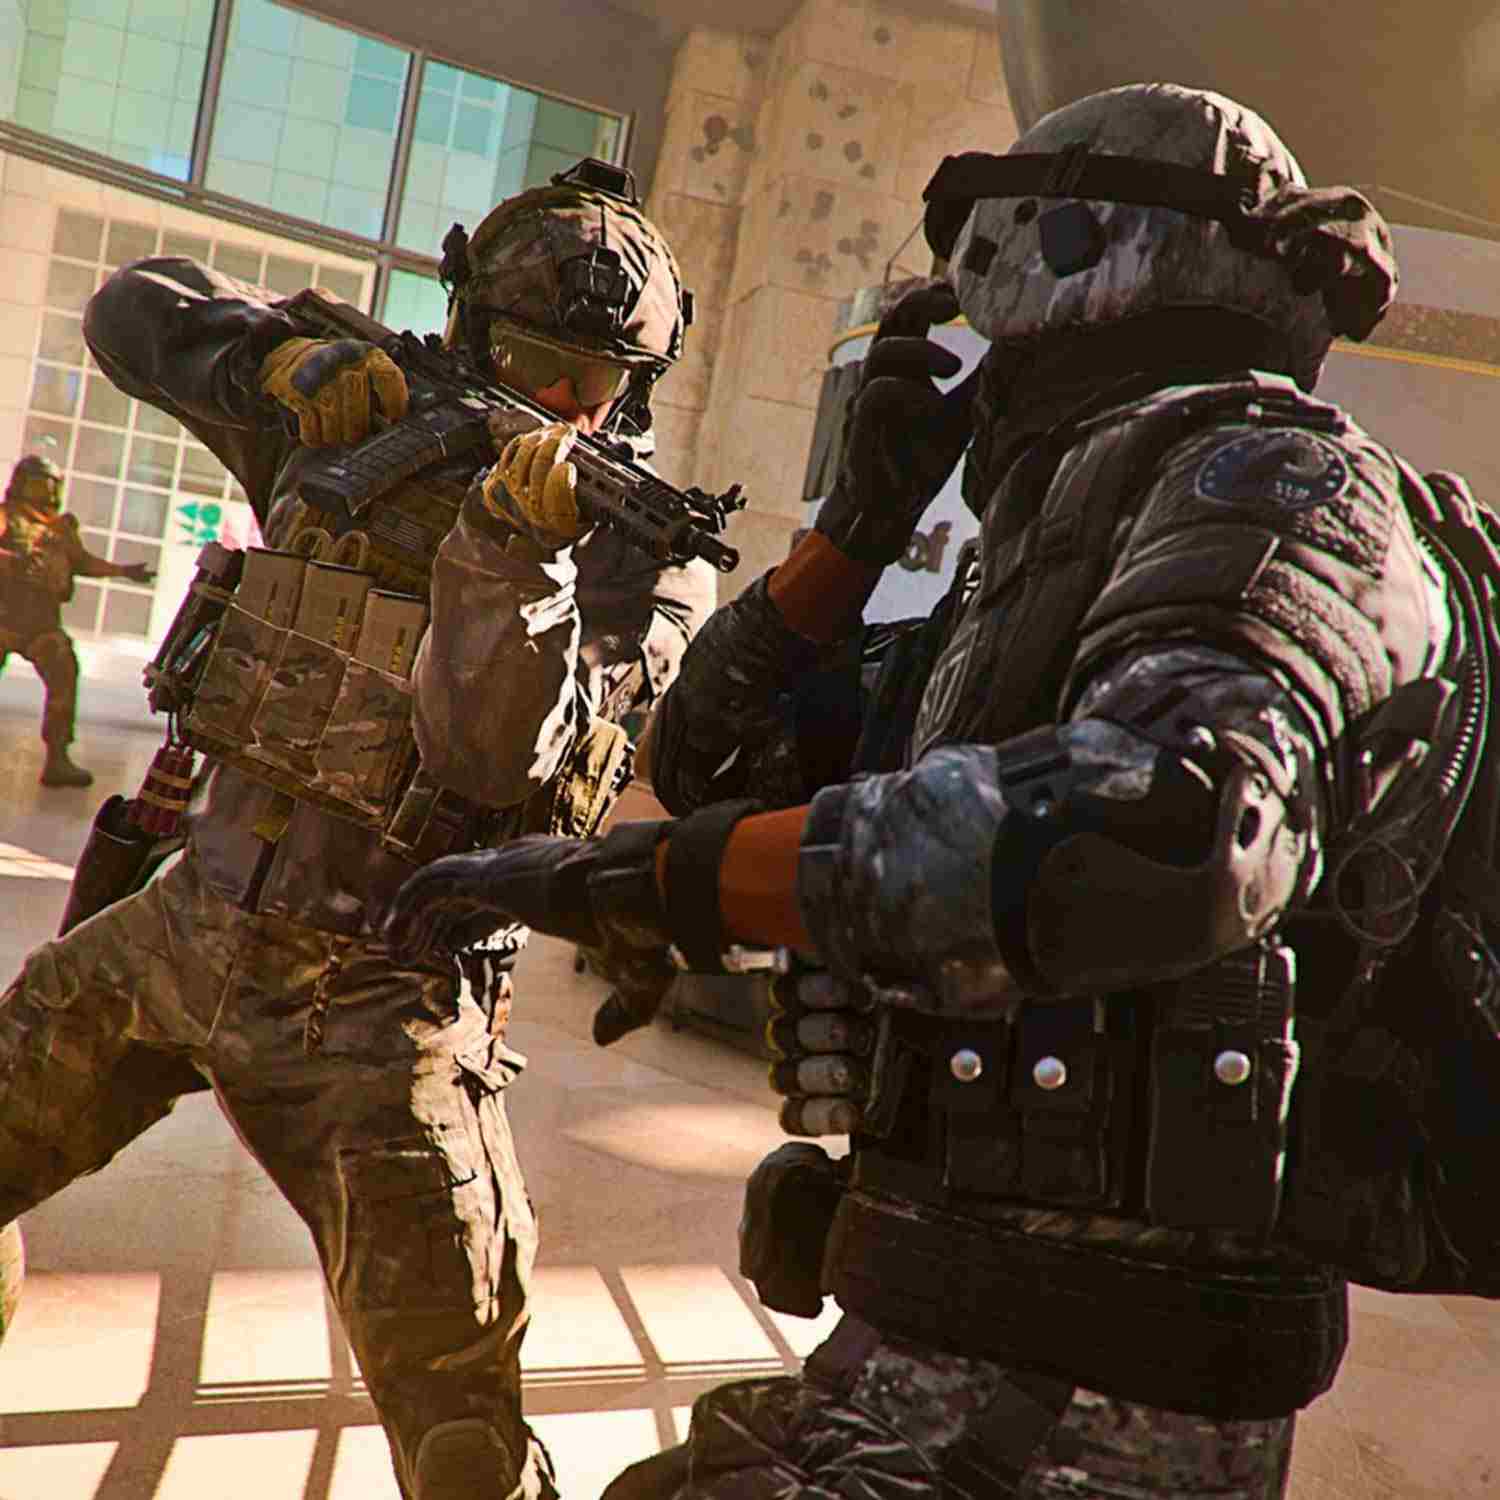 Se rumorea que Modern Warfare 2 podría ser gratis por un fin de semana